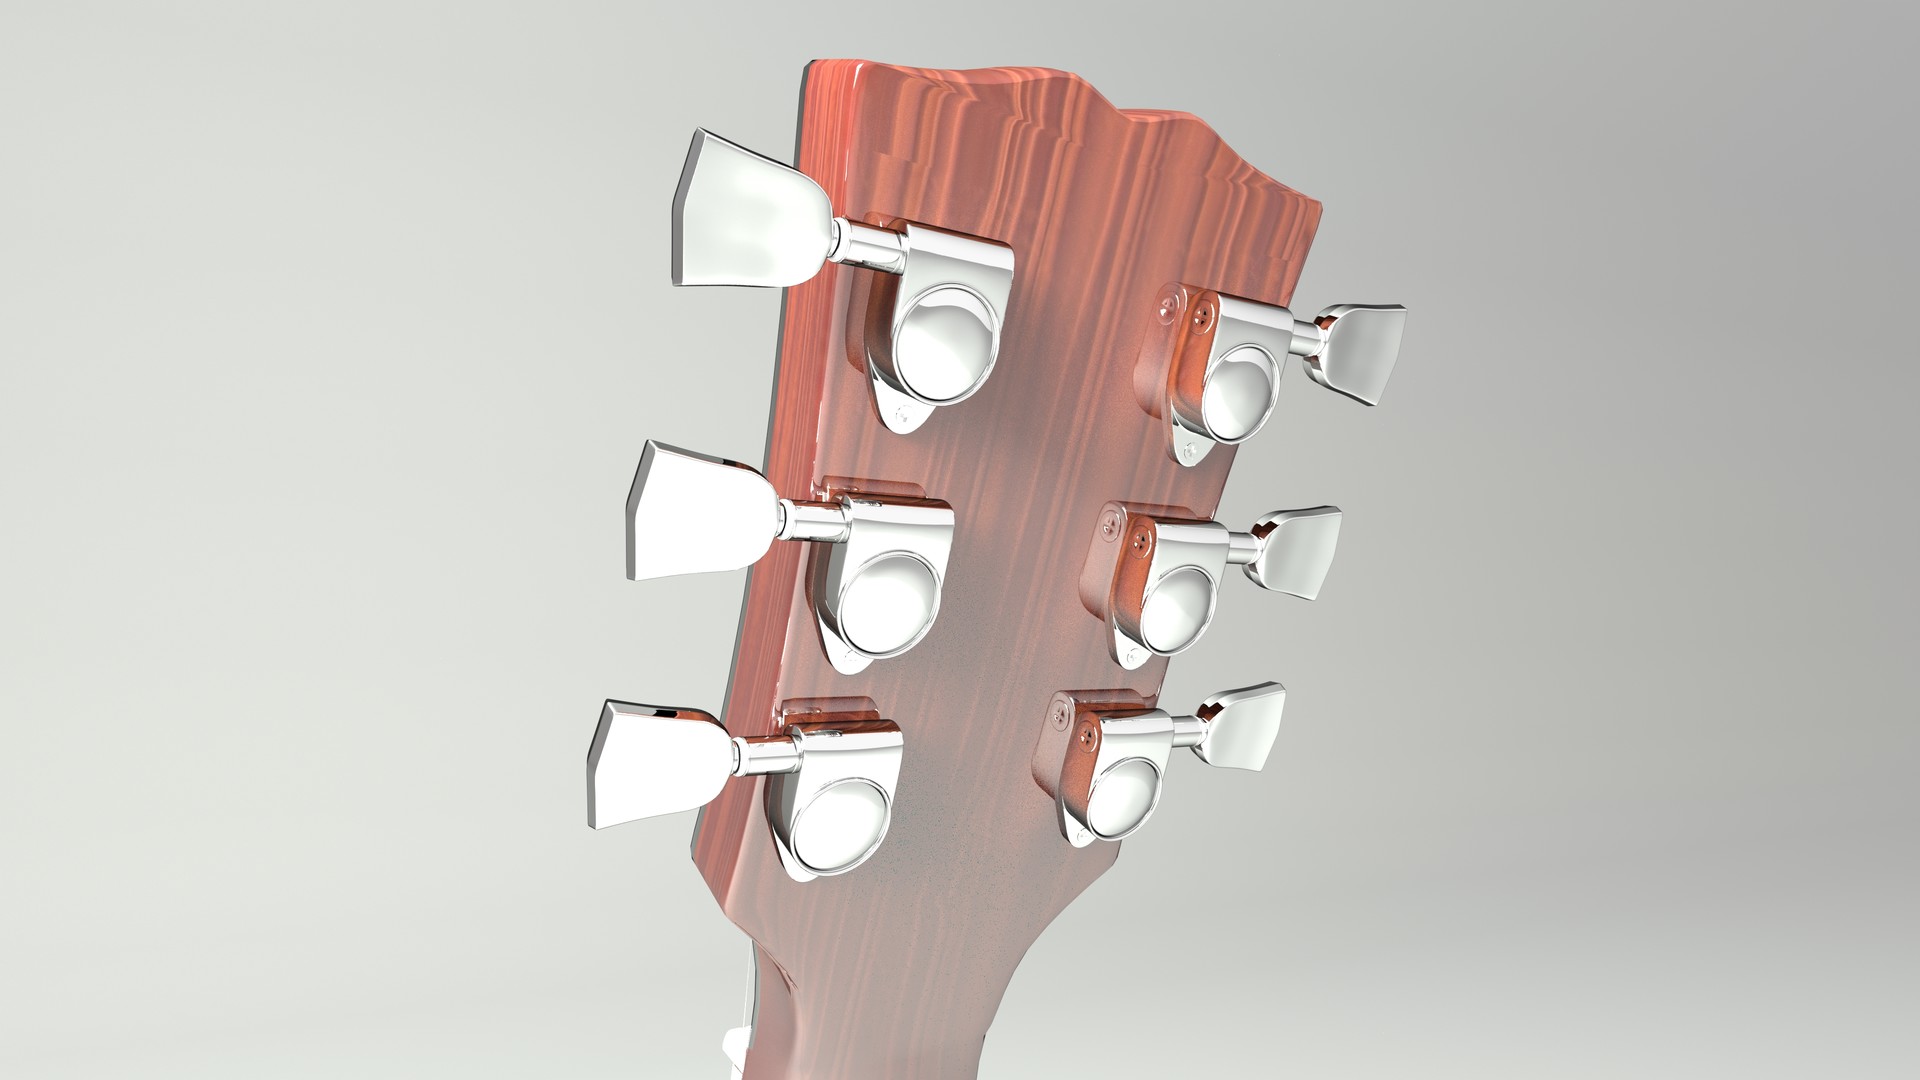 Download Artstation Sg Gibson Guitar 3d Model Waldemar Scafarelli PSD Mockup Templates